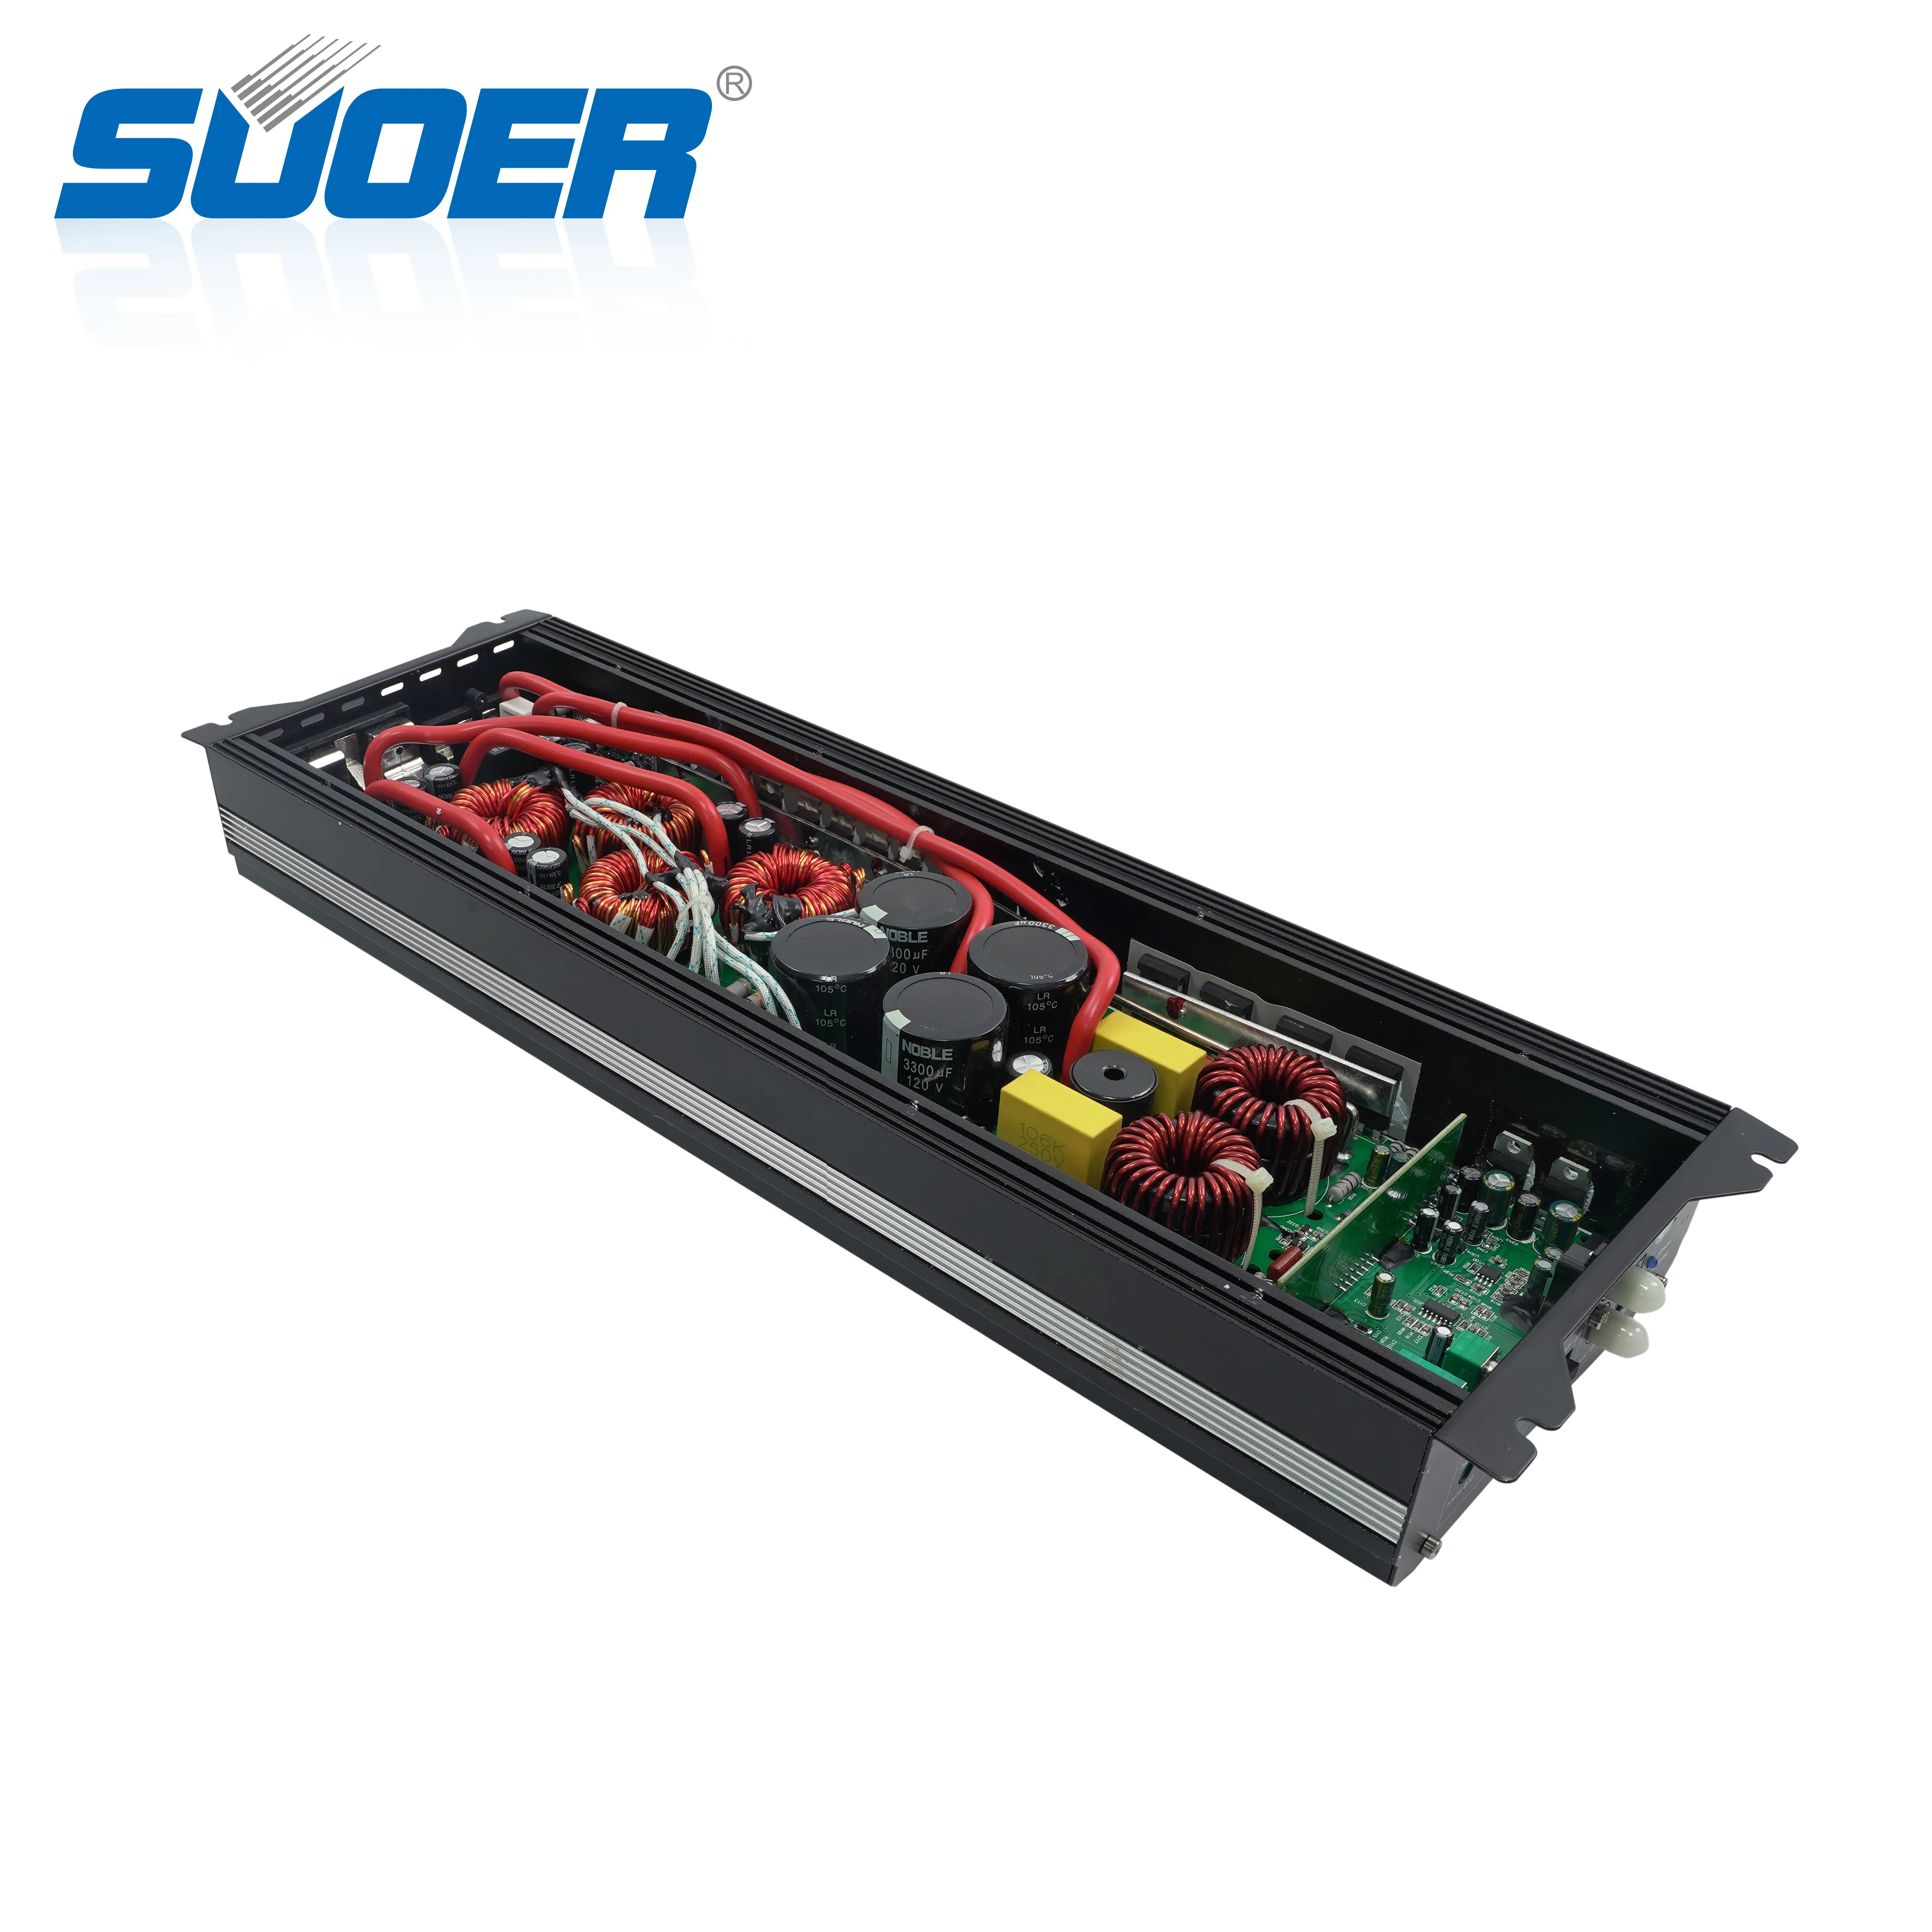 Suoer CL-5K Hochleistungs-Voll bereich 1*5000 Watt rms Leistungs verstärker Mono kanal Klasse d Auto verstärker